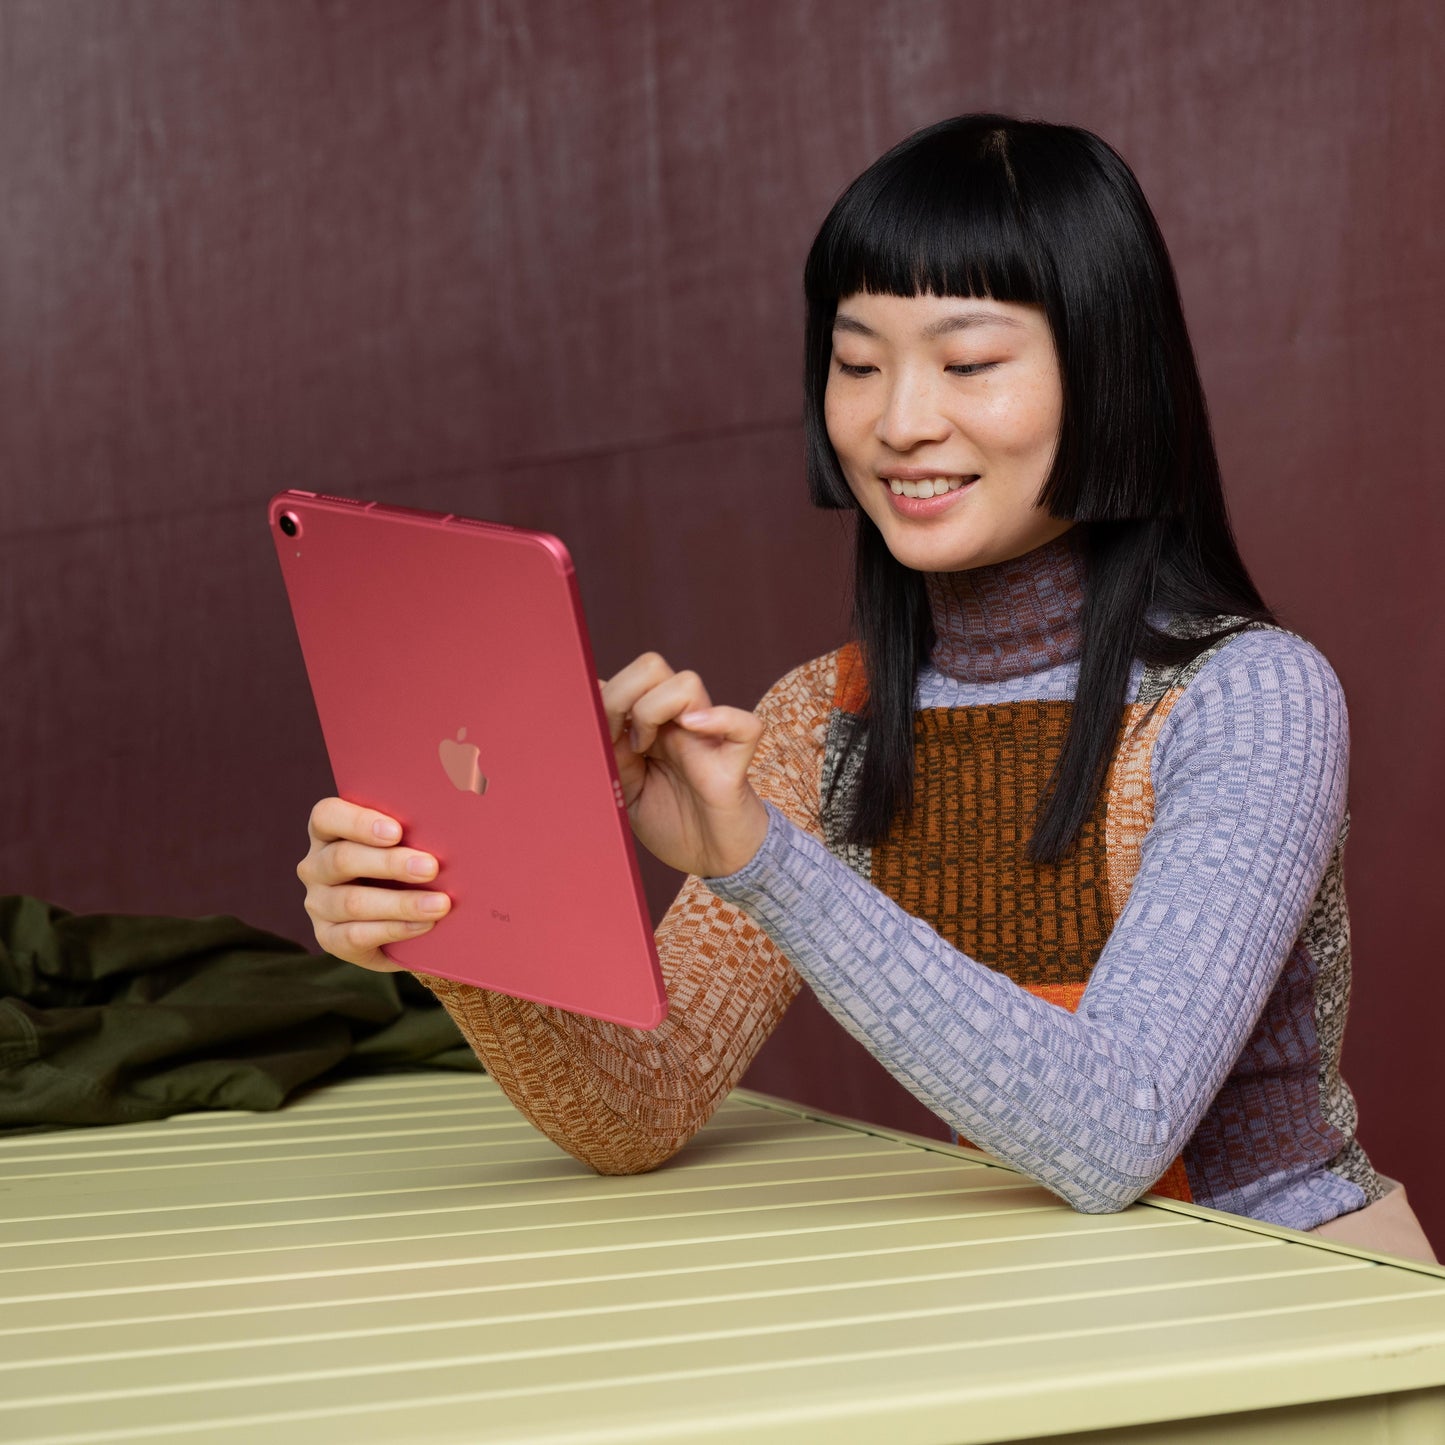 2022 10.9-inch iPad Wi-Fi + Cellular 64GB - Pink (10th generation)